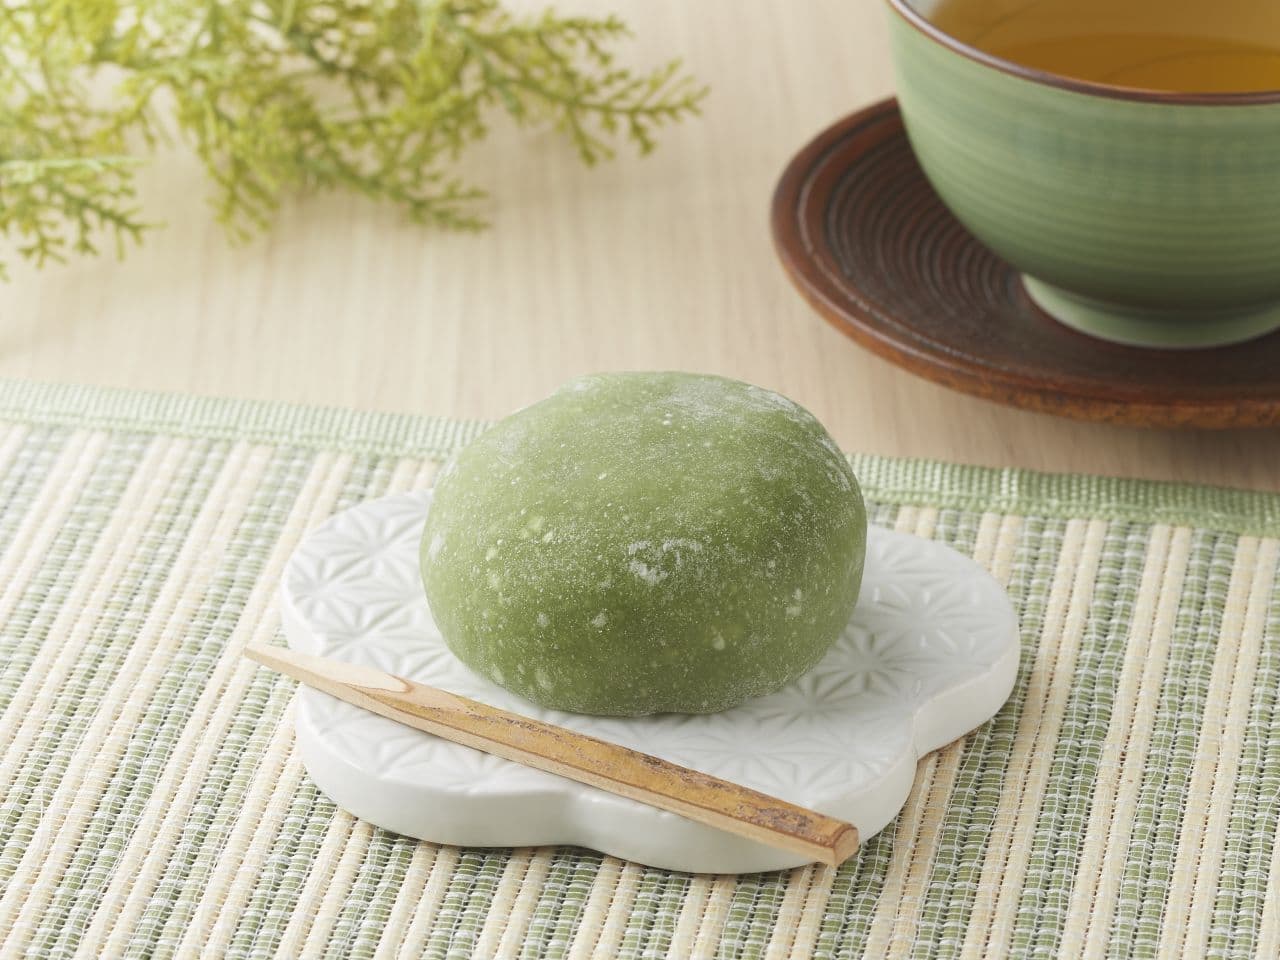 Ministop "Daifuku with thick green tea cream